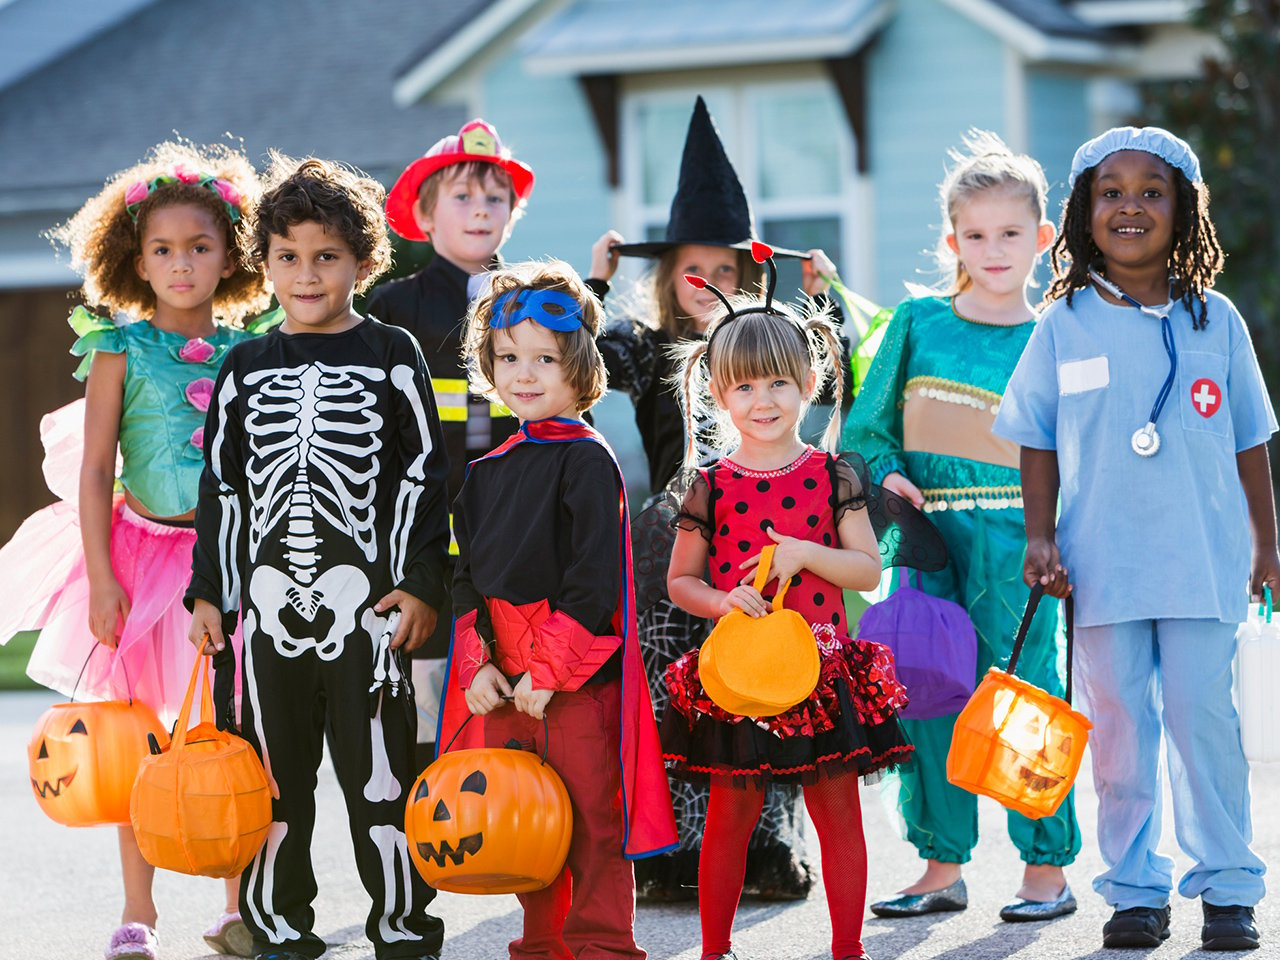 School board to kids: Please don’t wear these Halloween costumes